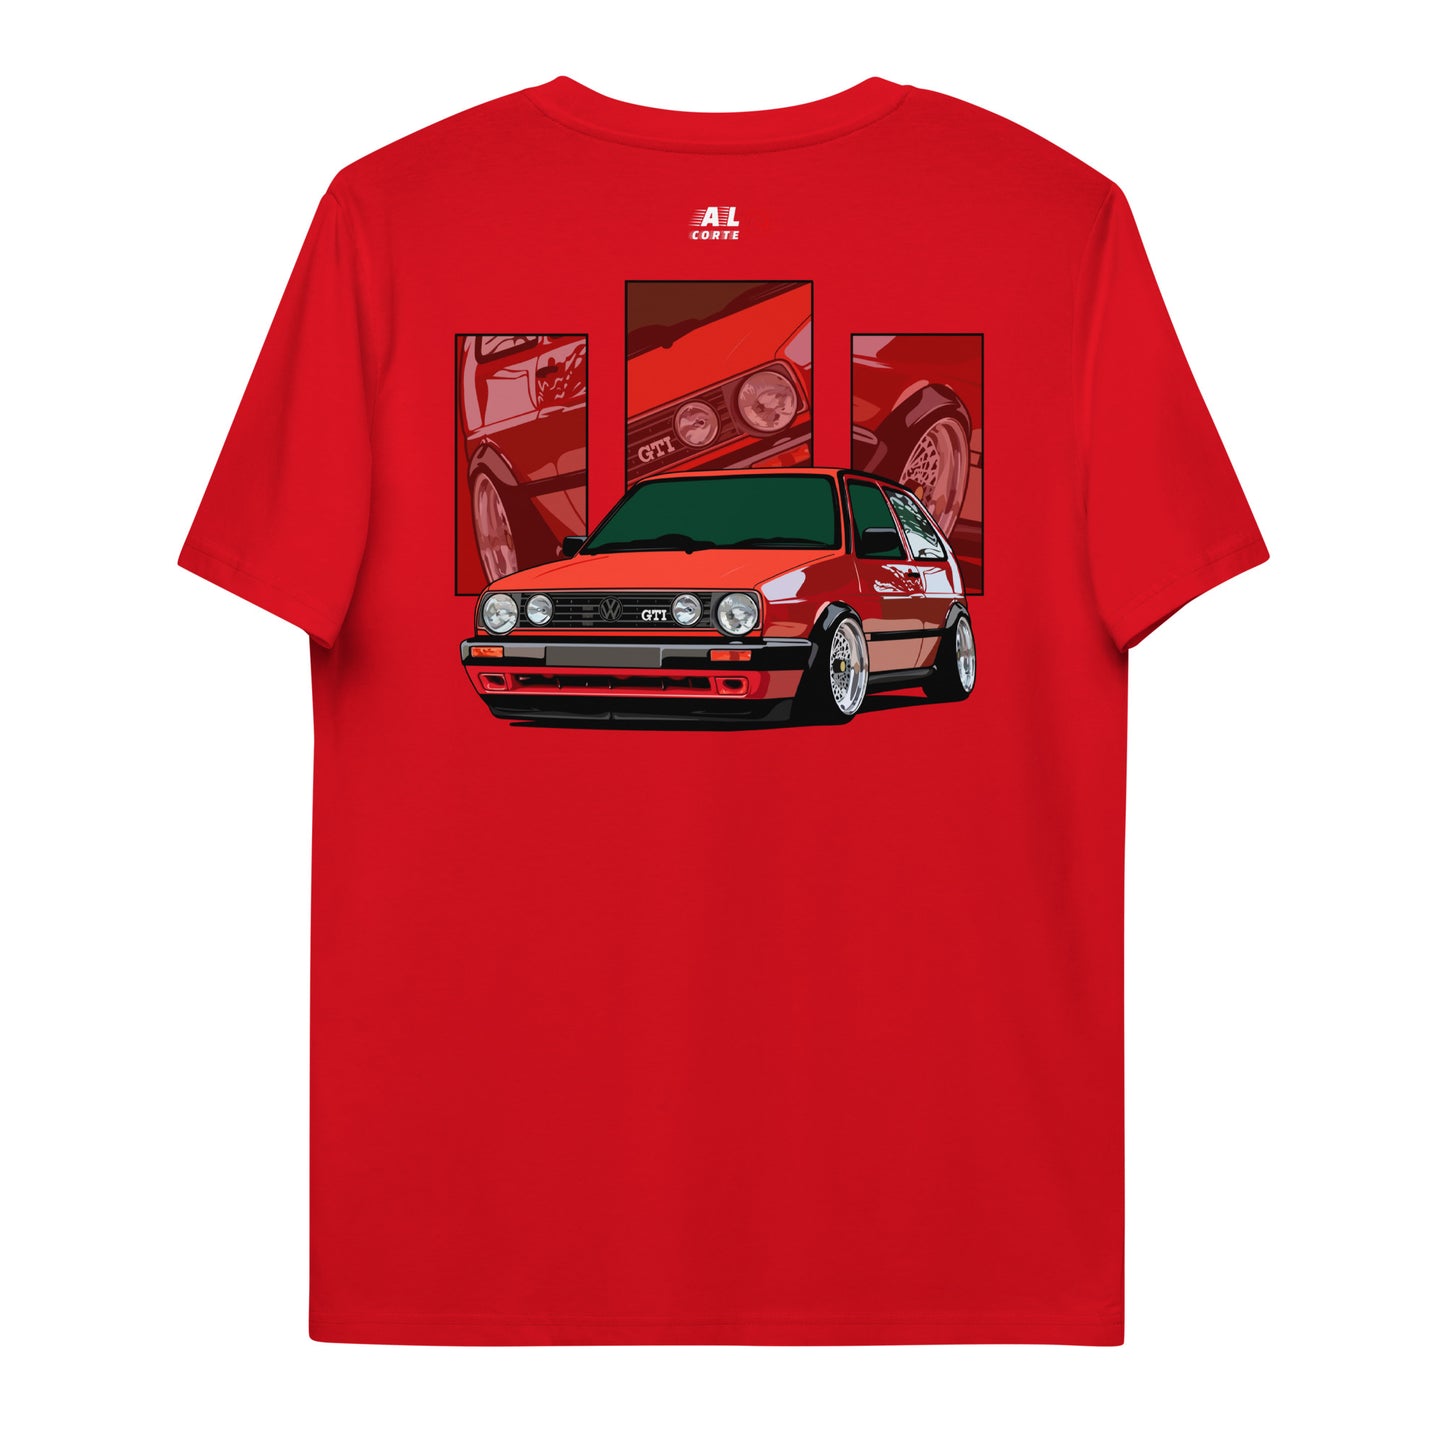 Golf 2 GTI T-shirt